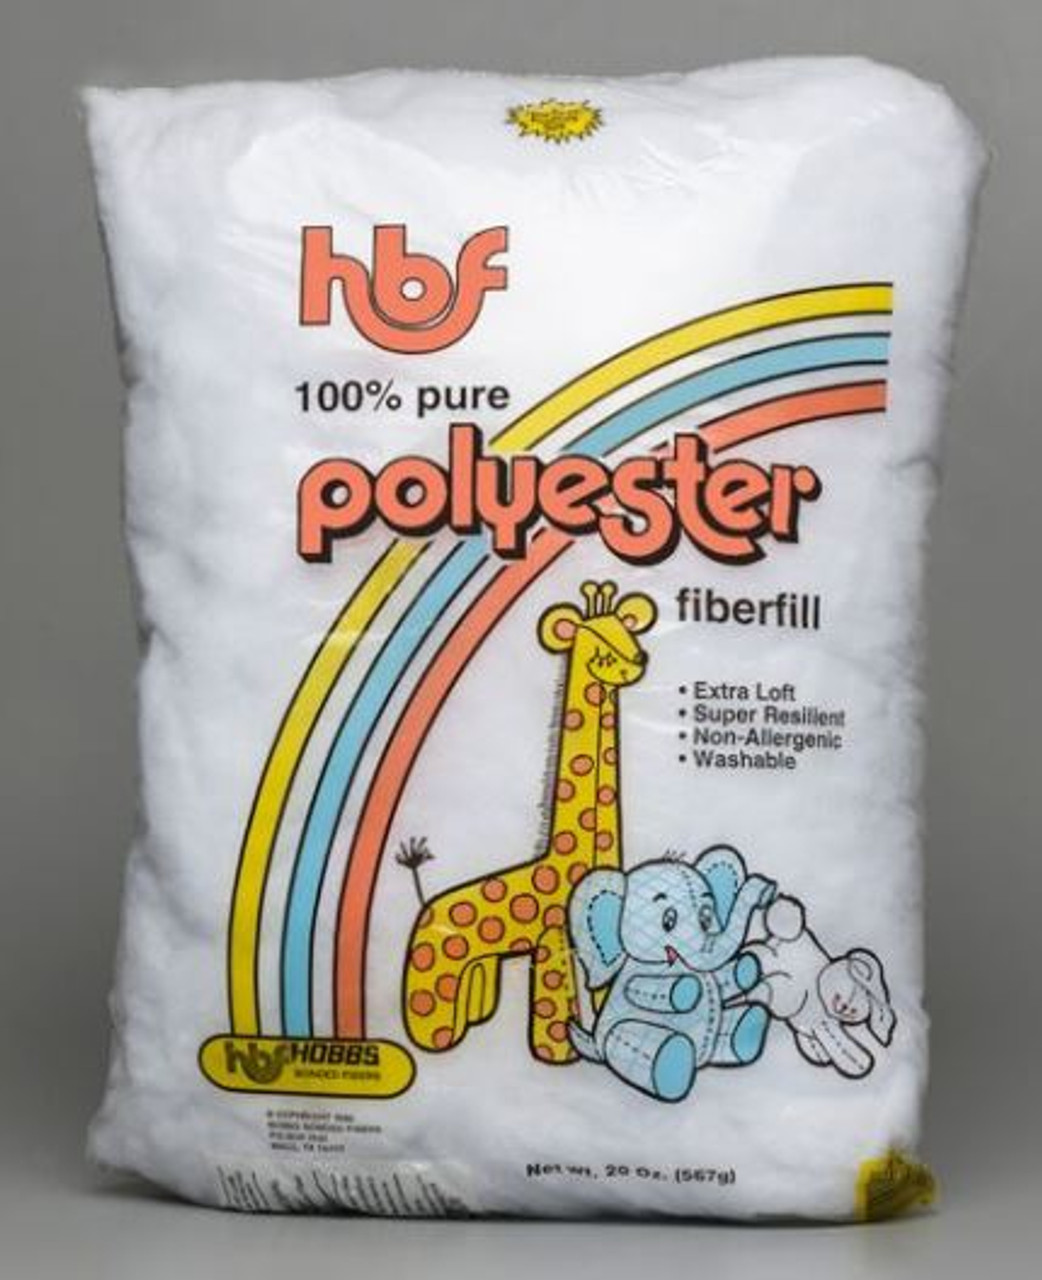 Hobbs polyester fiberfill